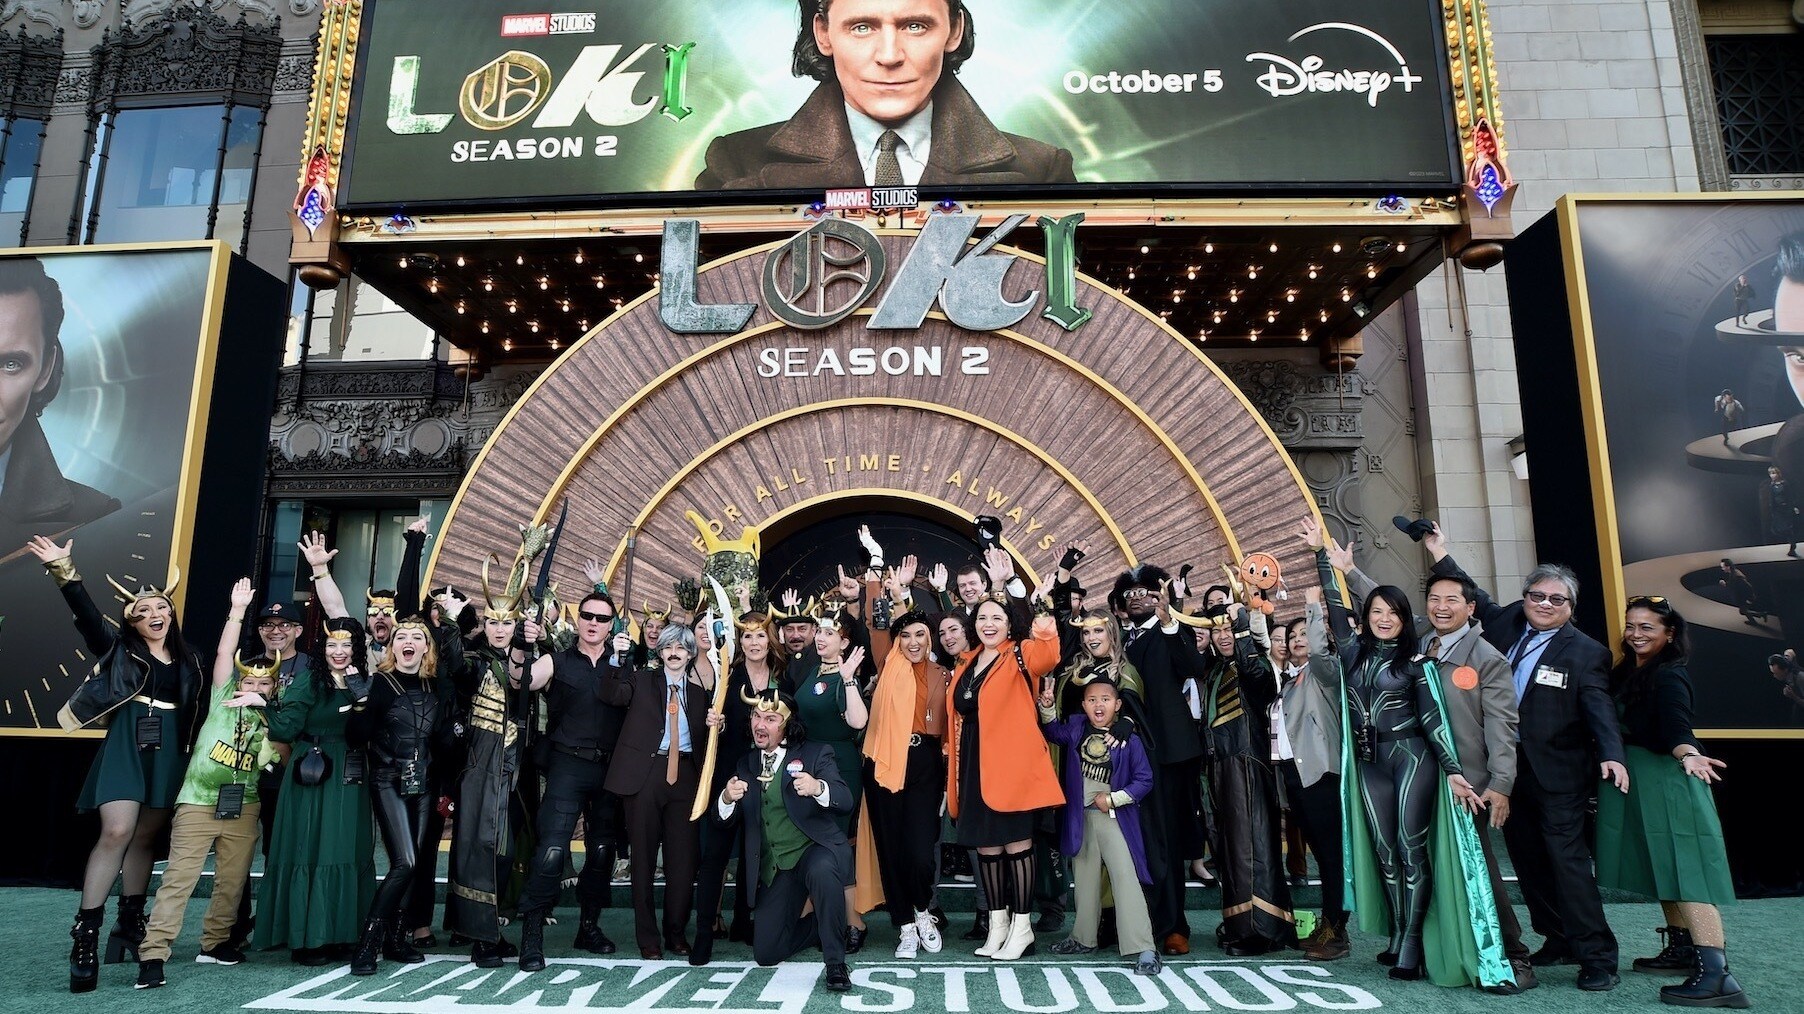 Disney+ Shares Photos From Marvel Studios’ “Loki” Season 2 Multi-City Fan Events